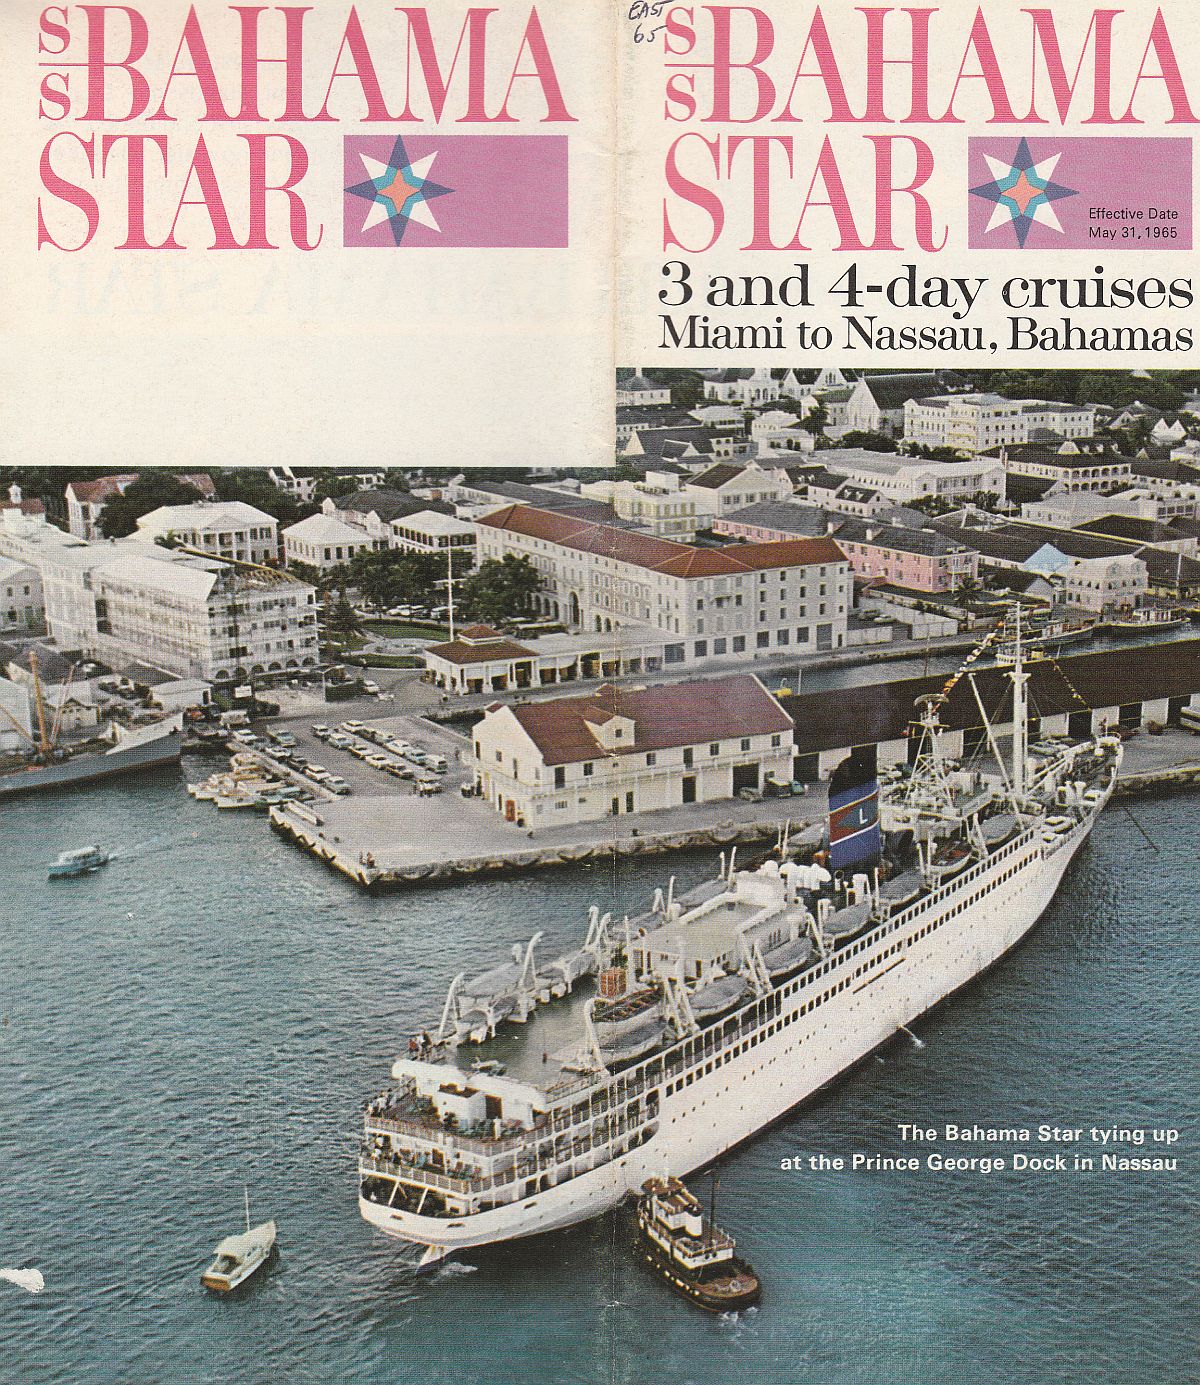 ss Bahama Star effective May 31, 1965: 3 and 4-day cruises Miami to Nassau, Bahamas